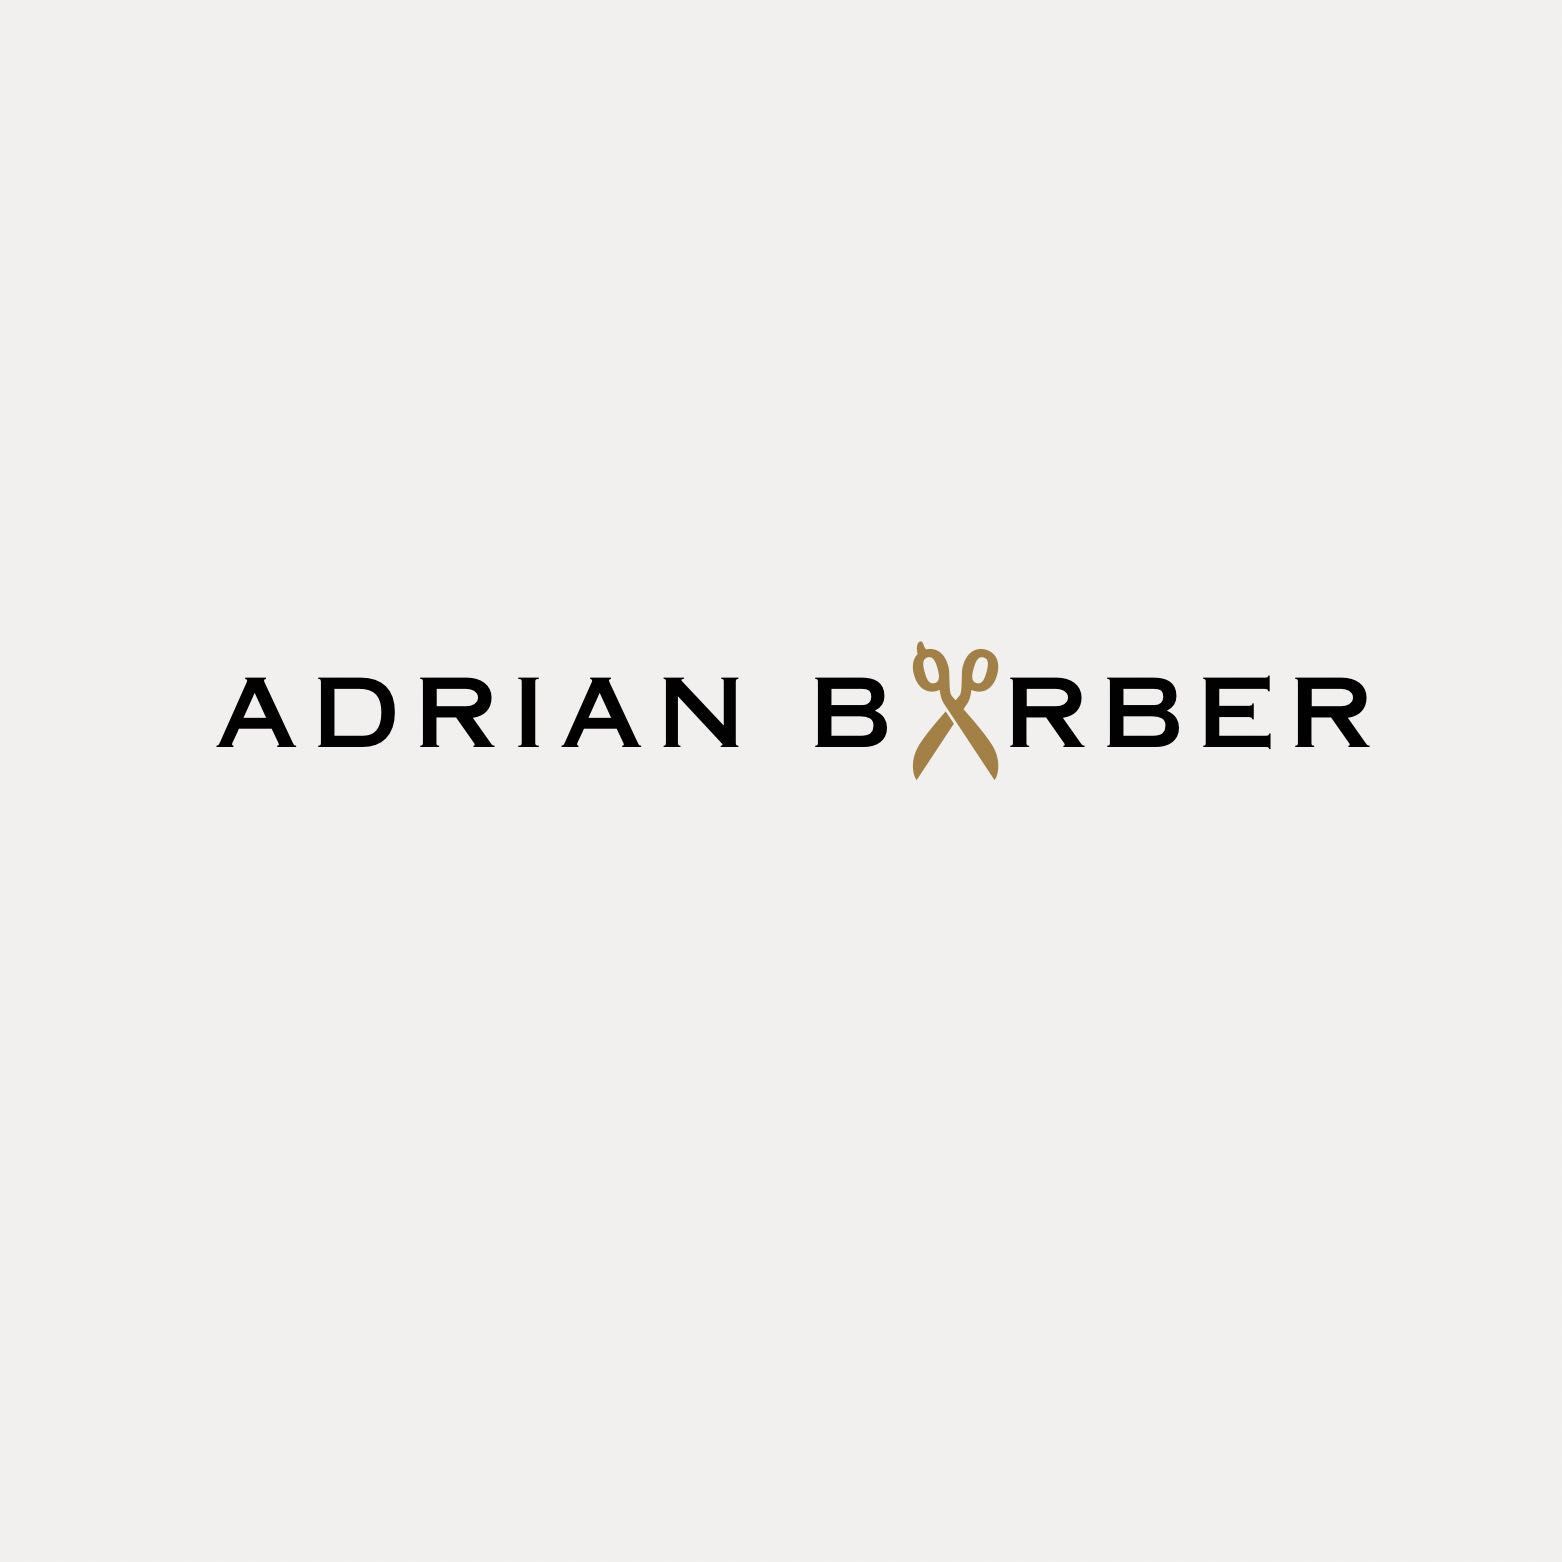 Adrian Barber, 120 S Dixie Hwy, West Palm Beach, 33401